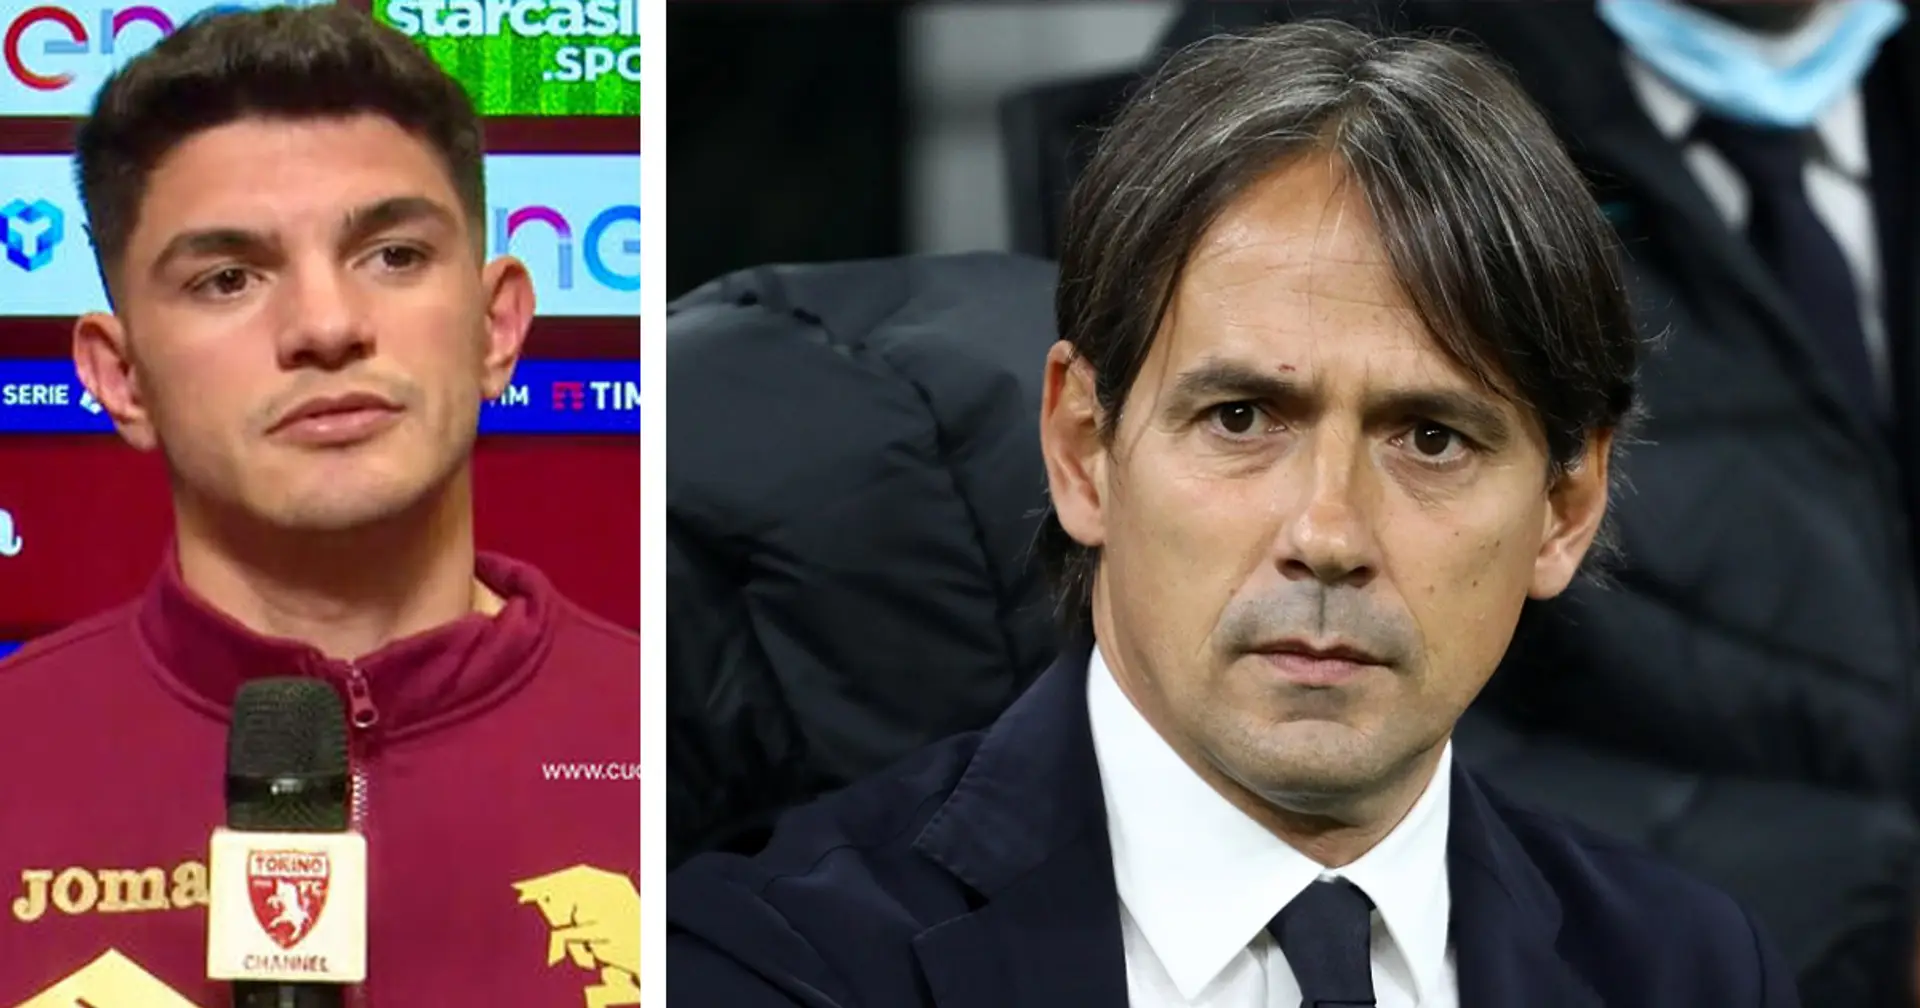 "I fischi di San Siro aiutano": l'ex Bellanova ringrazia Inzaghi, 2 match decisivi per la sua crescita